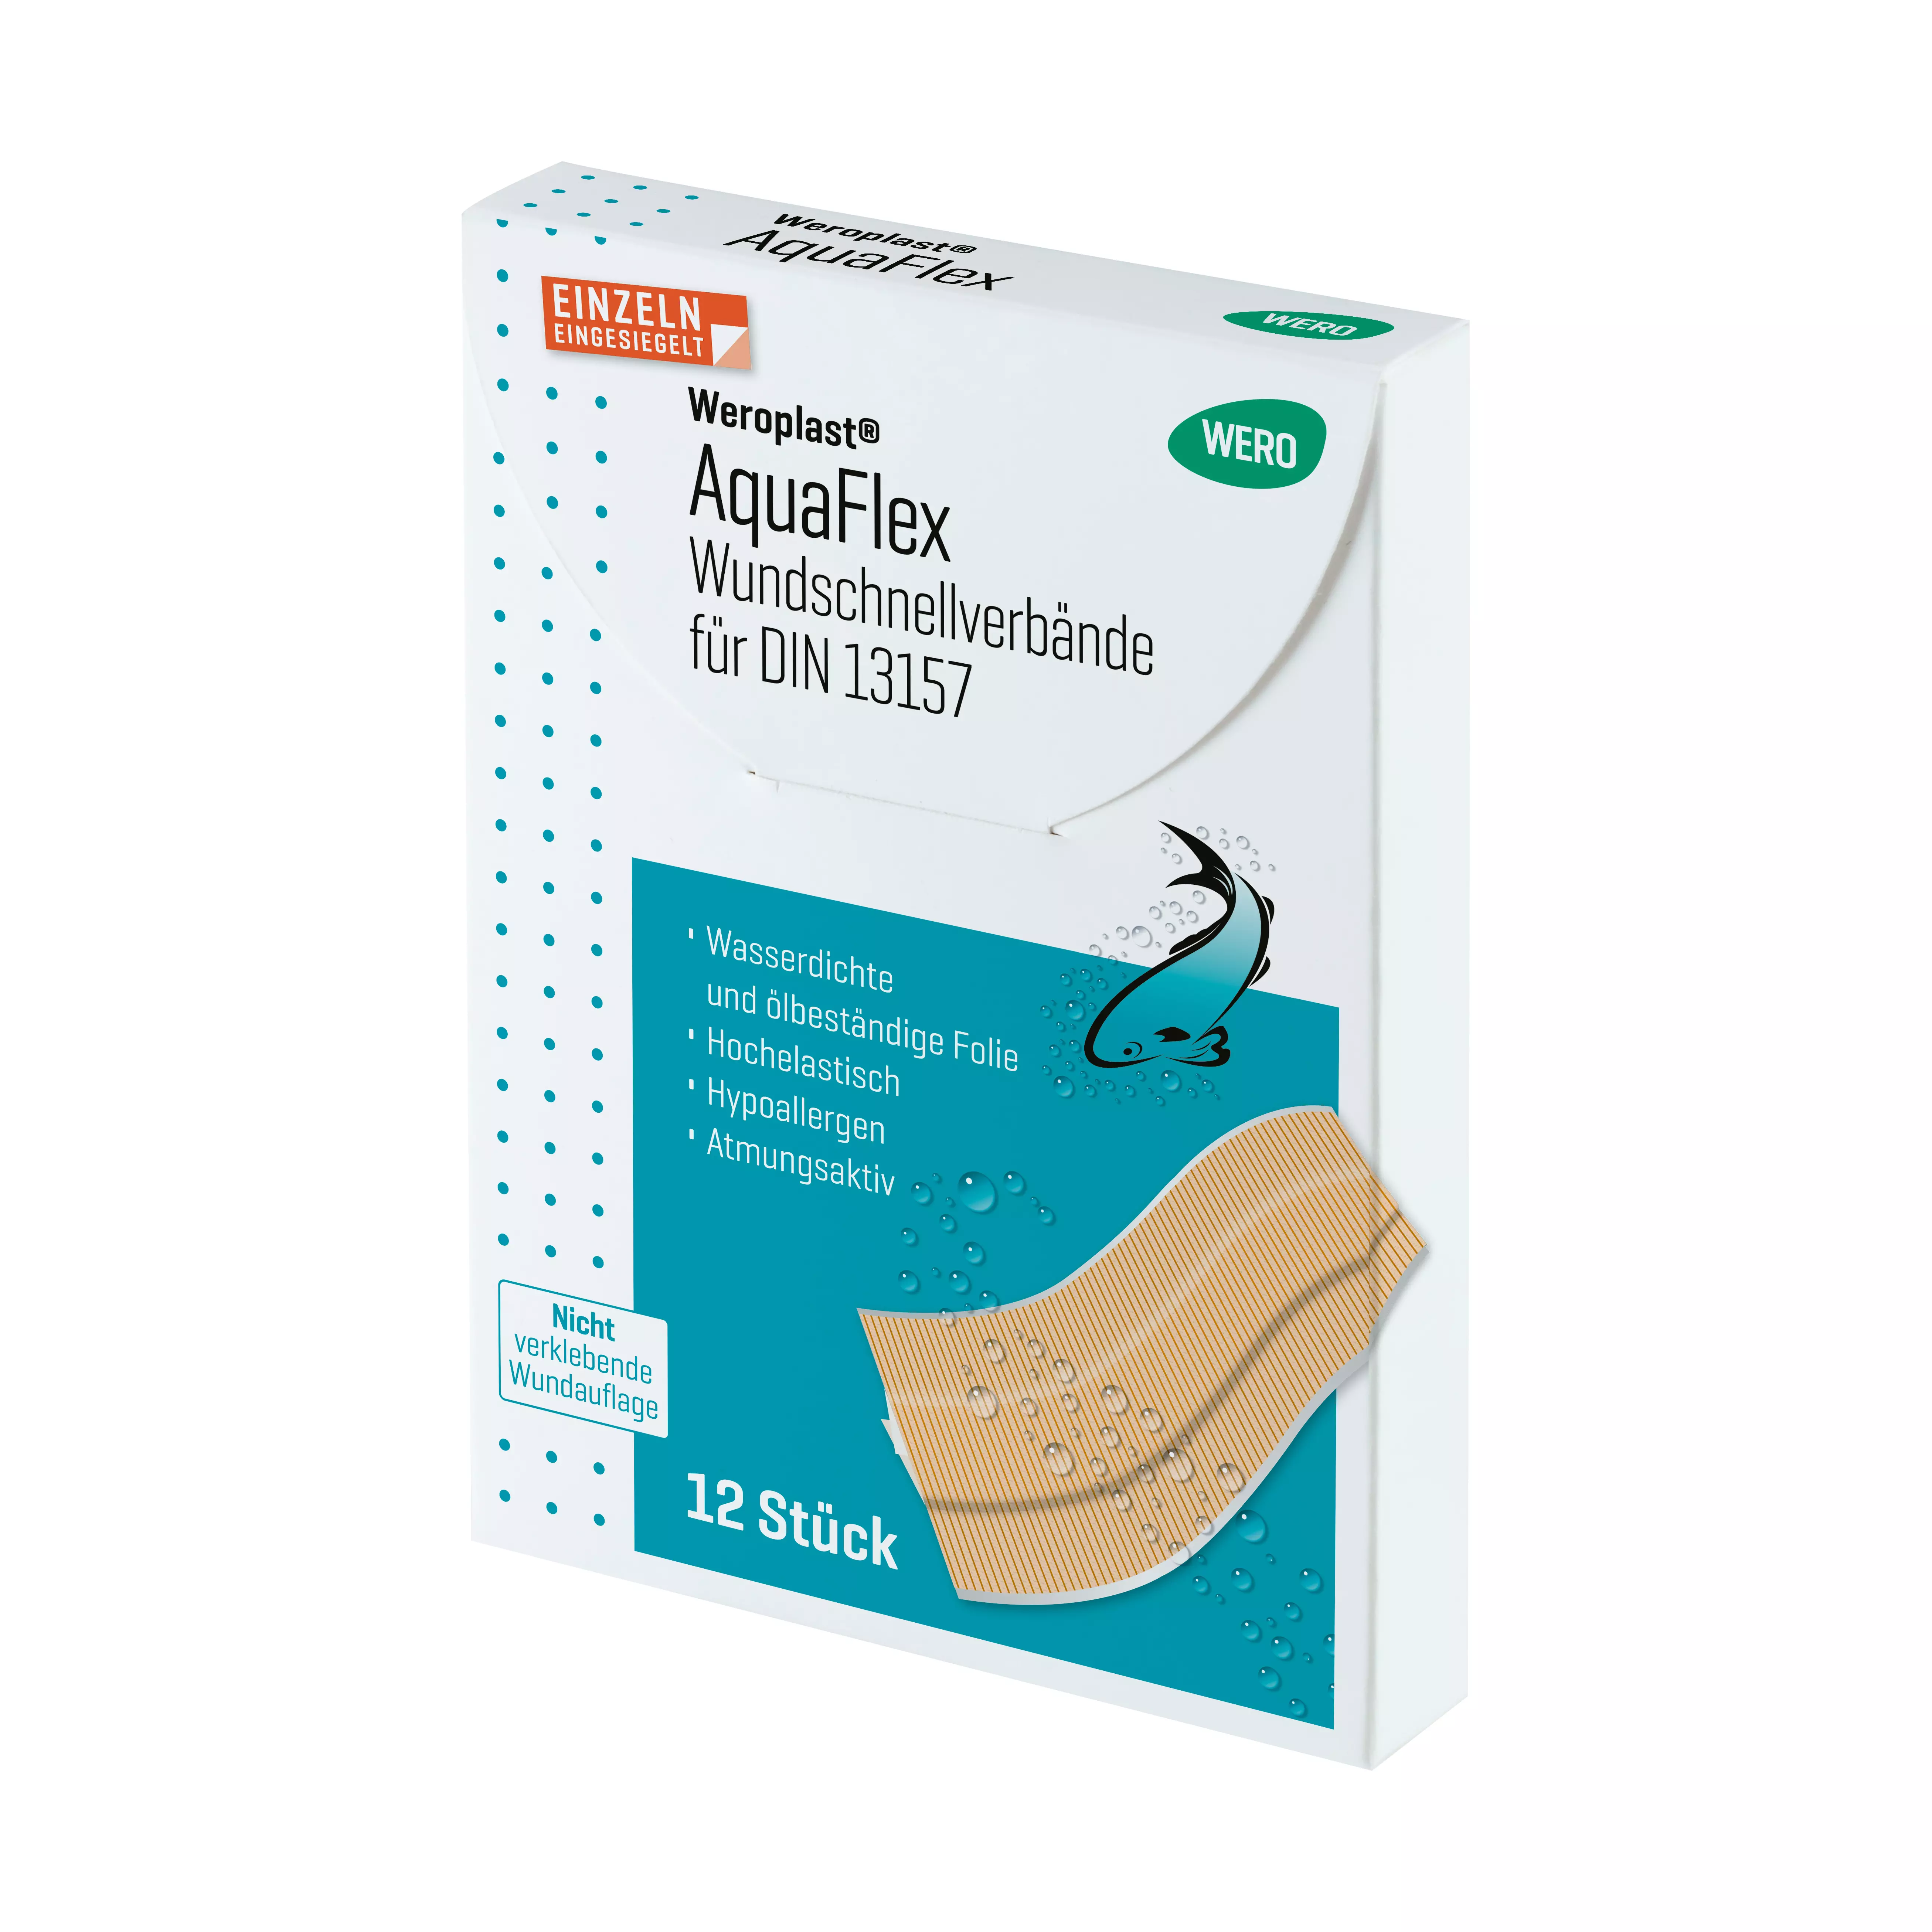 Weroplast® AquaFlex plasters - Quick wound dressings DIN 13157